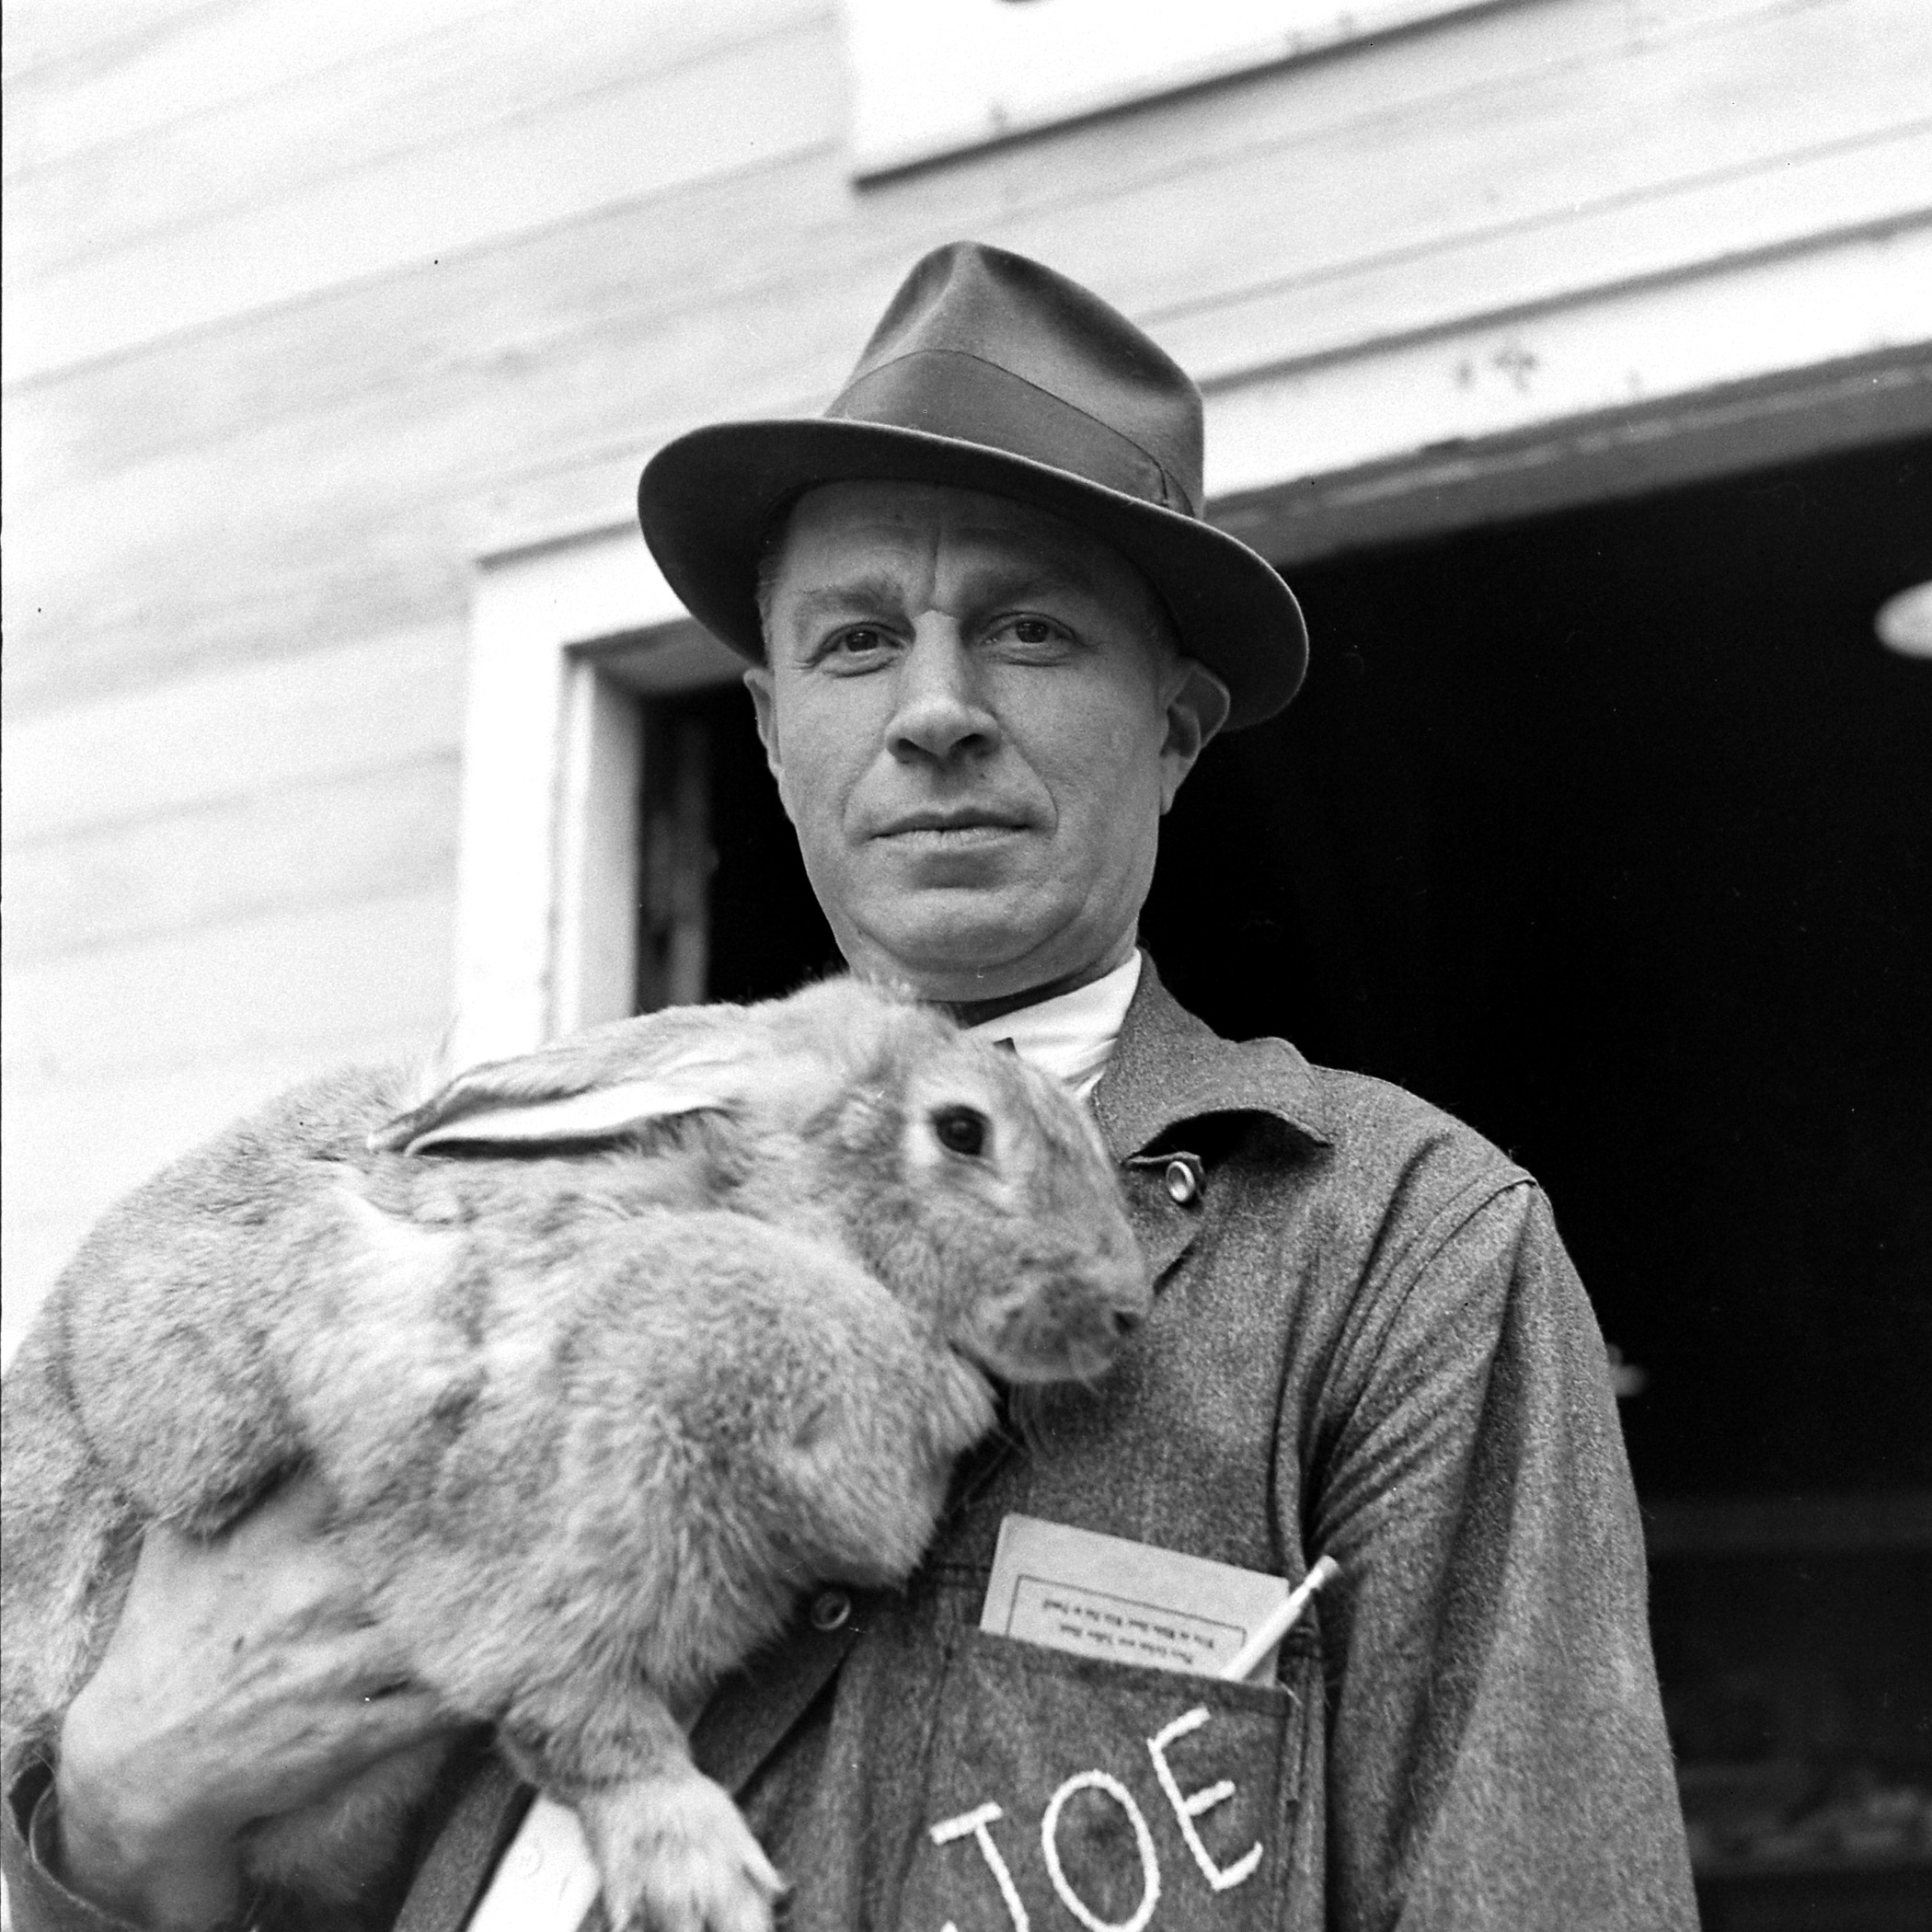 Long Island Rabbit Breeders Association Rabbit show, circa 1943.